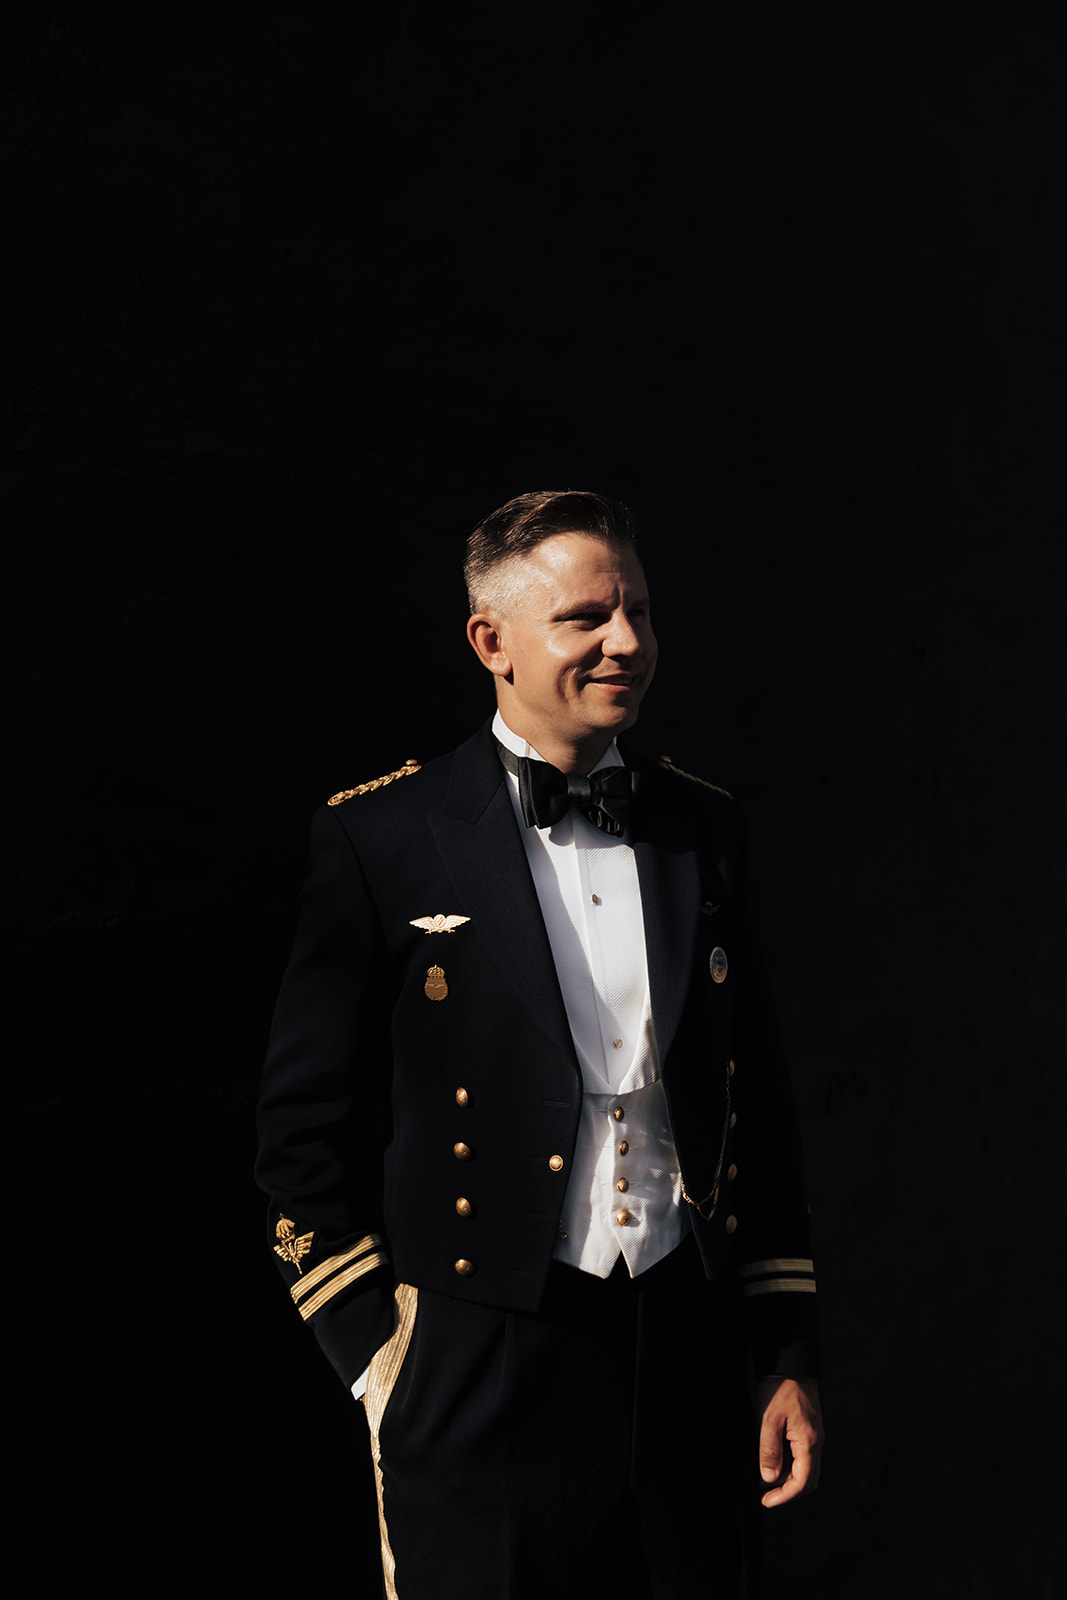 Artful photo of man in military uniform with dark background taken as anniversary photos in Charleston